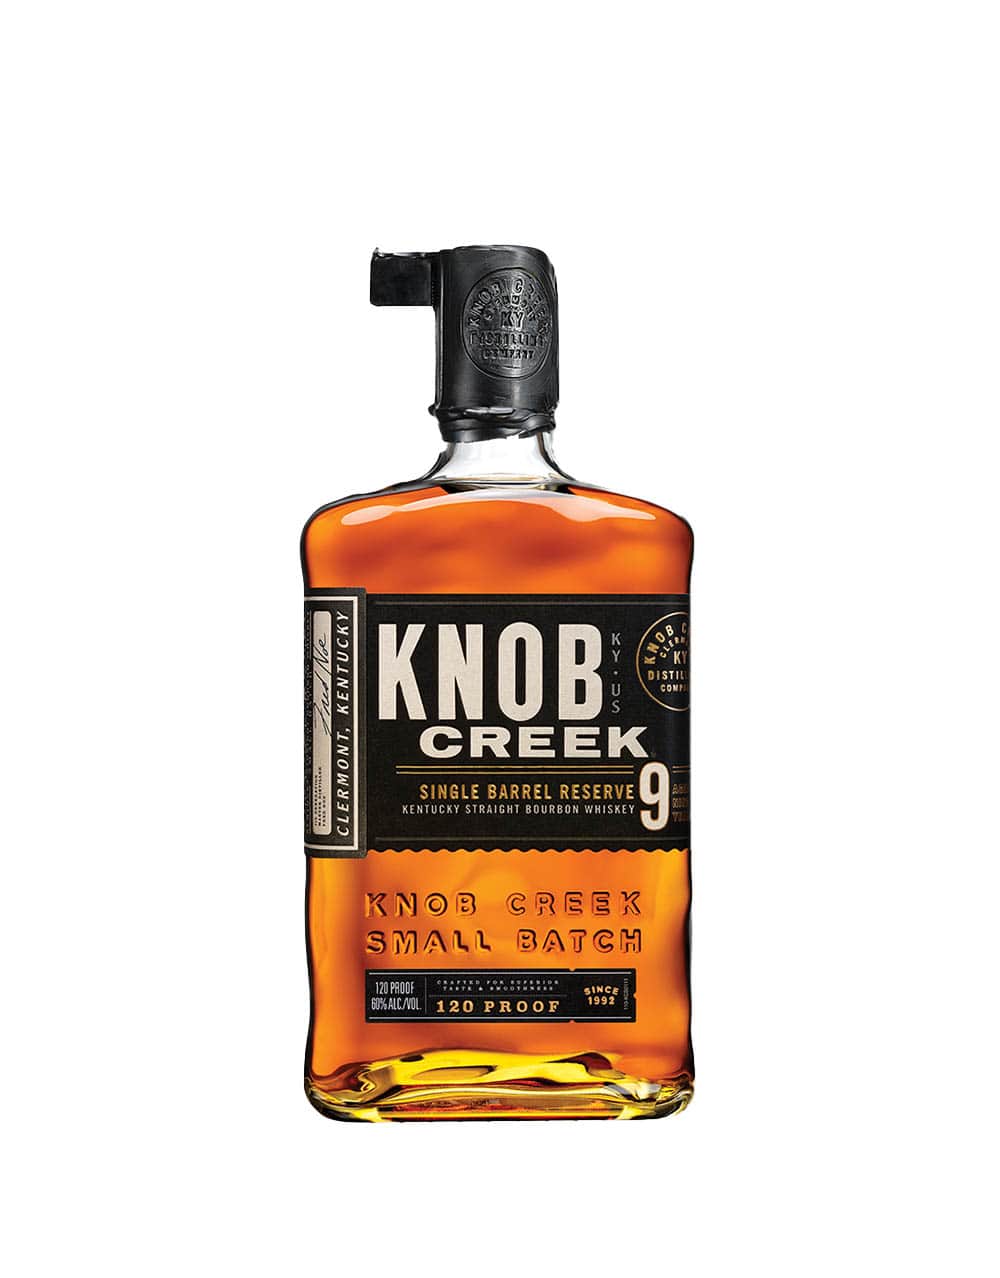 Knob Creek Single Barrel Reserve 9 Kentucky straight Bourbon Whiskey